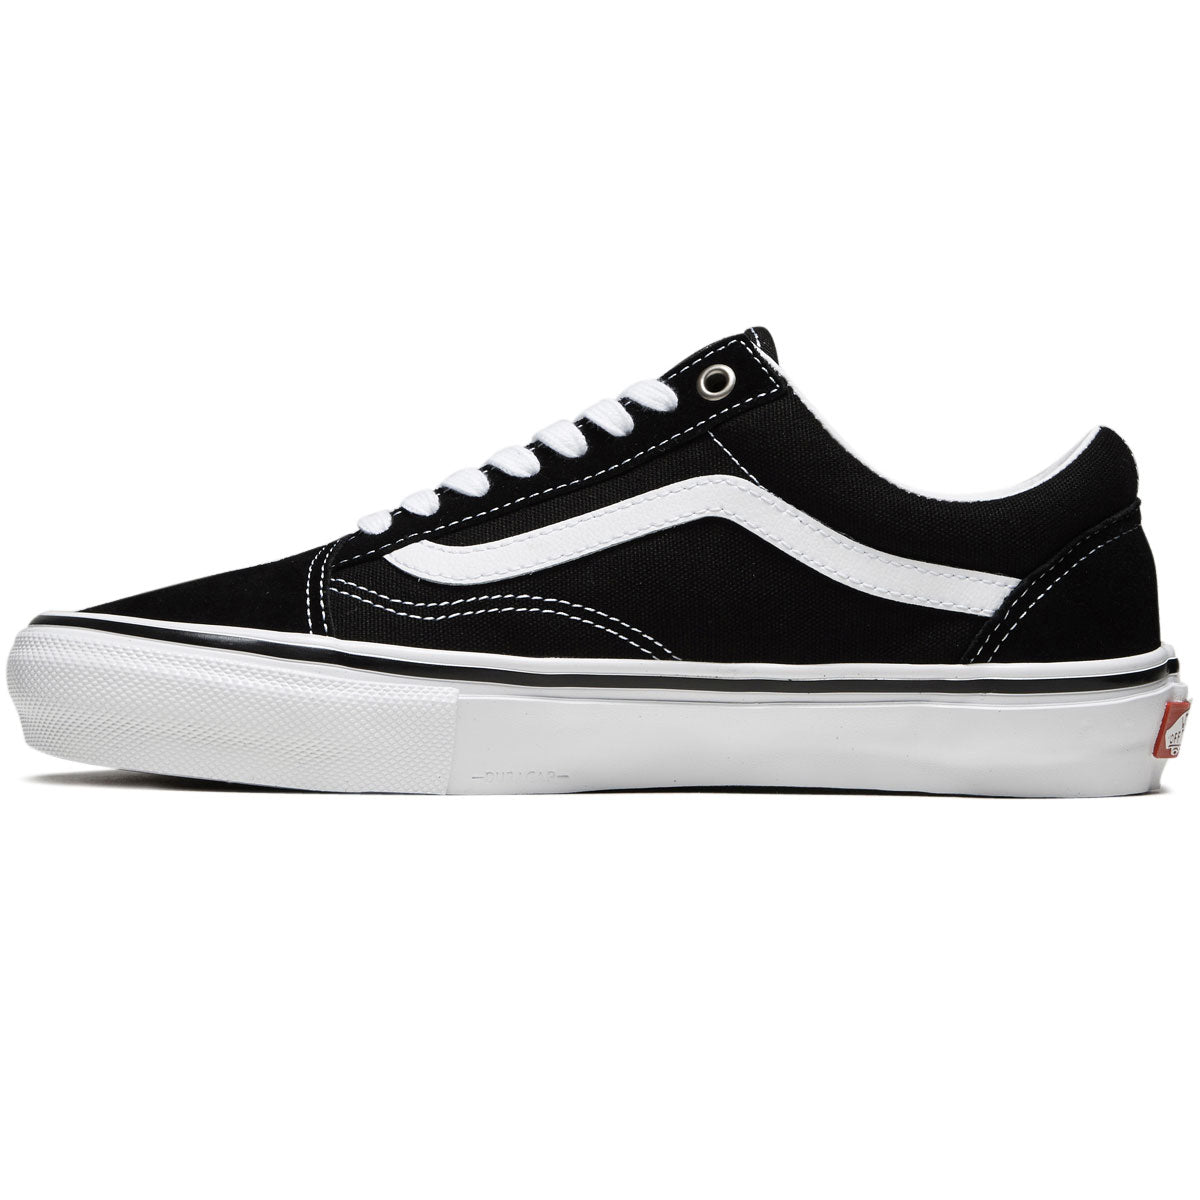 Vans Skate Old Skool Shoes - Black/White image 2